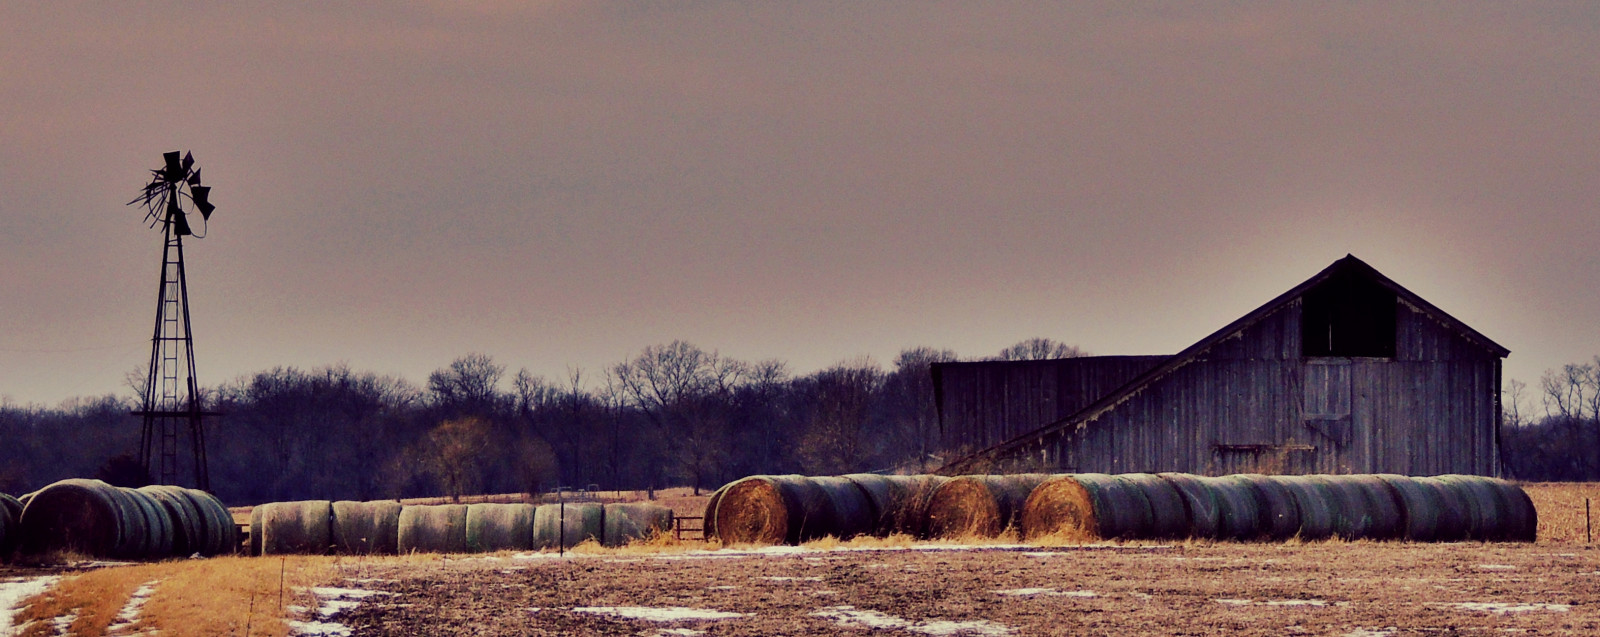 Wallpaper : windmill, windmillwednesday, dilapidated, waterpump, barn, barnsandfarms, hay, bales, field, farm, Illinois, fountaingreen, cows, FEED, old, vintage, broken, oldfashioned, decay, rust 3252x1295